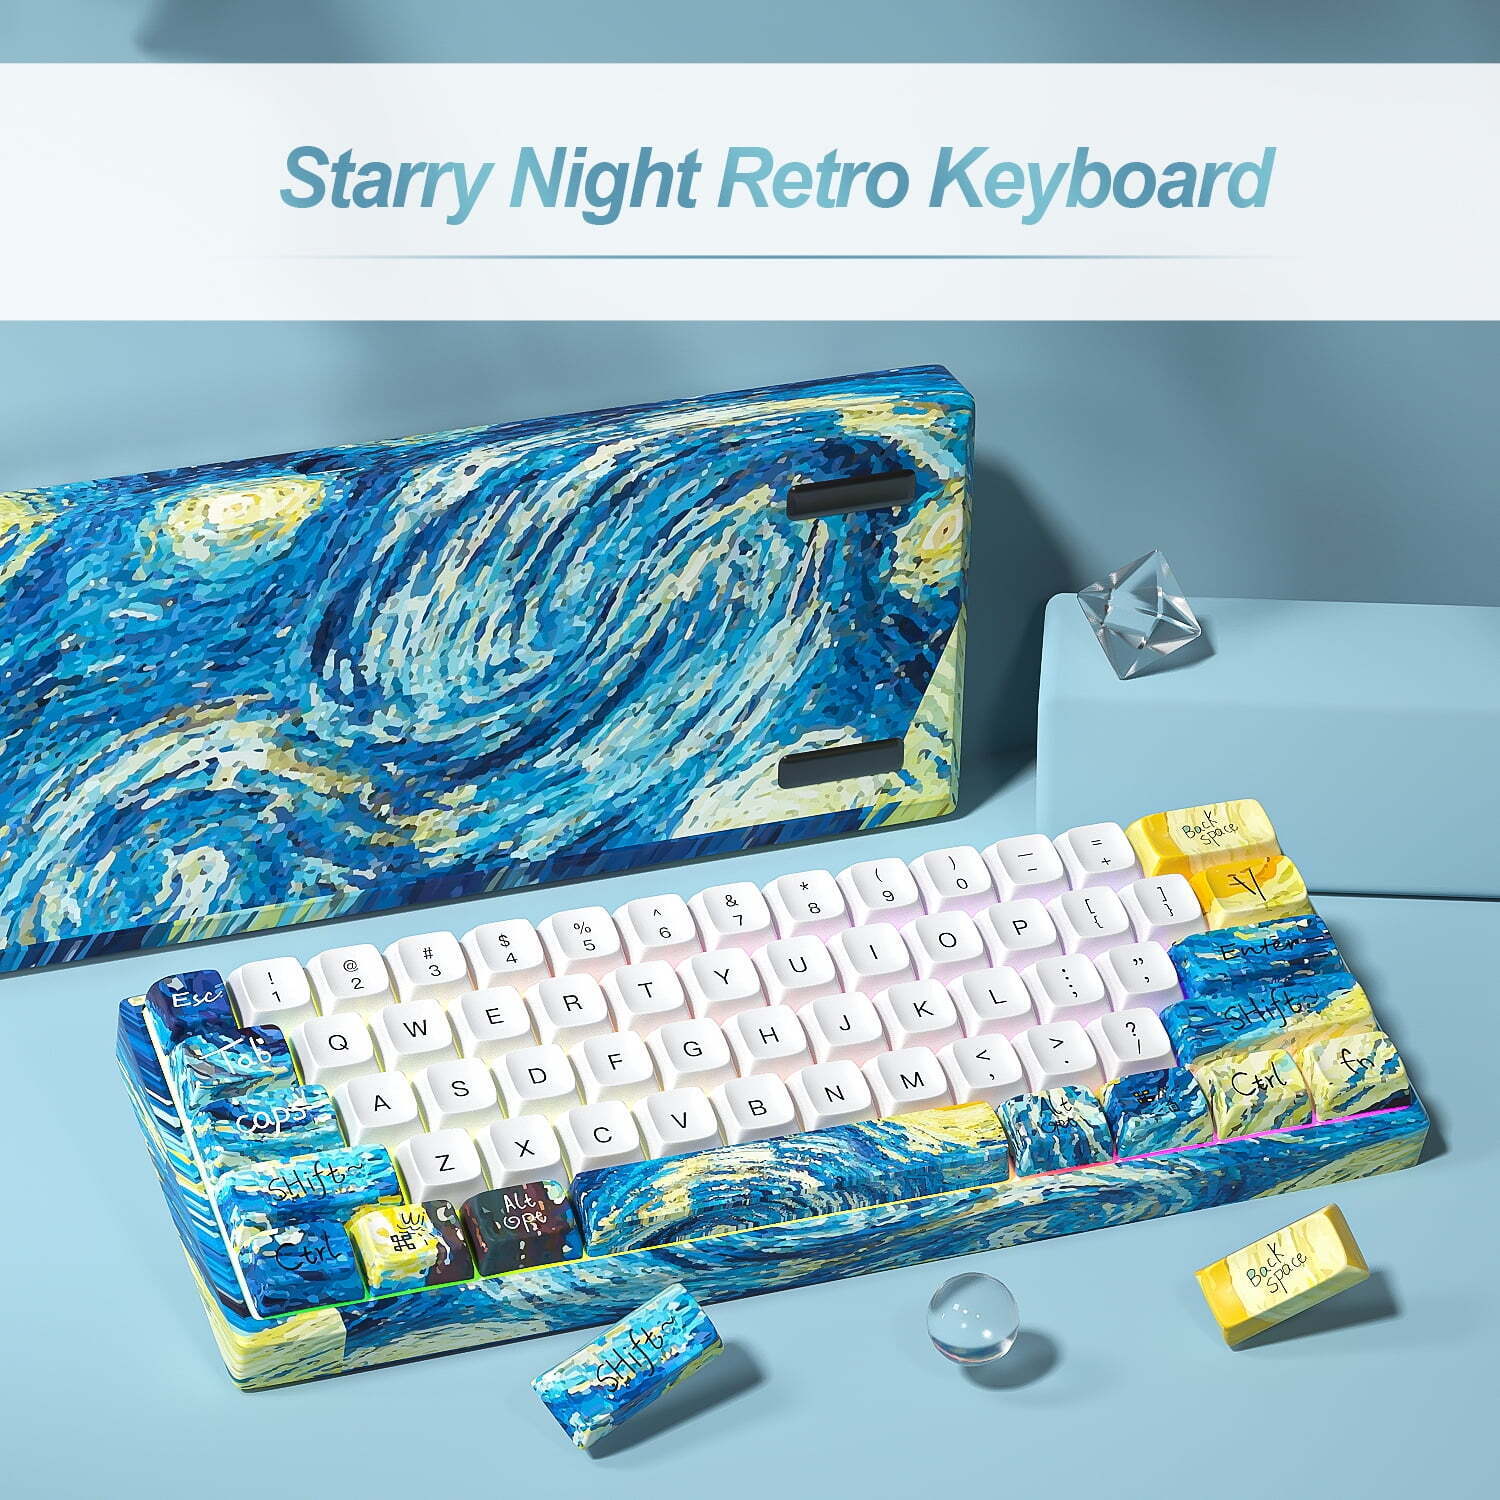 60% Wired Gaming Keyboard, Portable Mechanical Keyboard, 61 Keys RGB—MIHIYIRY